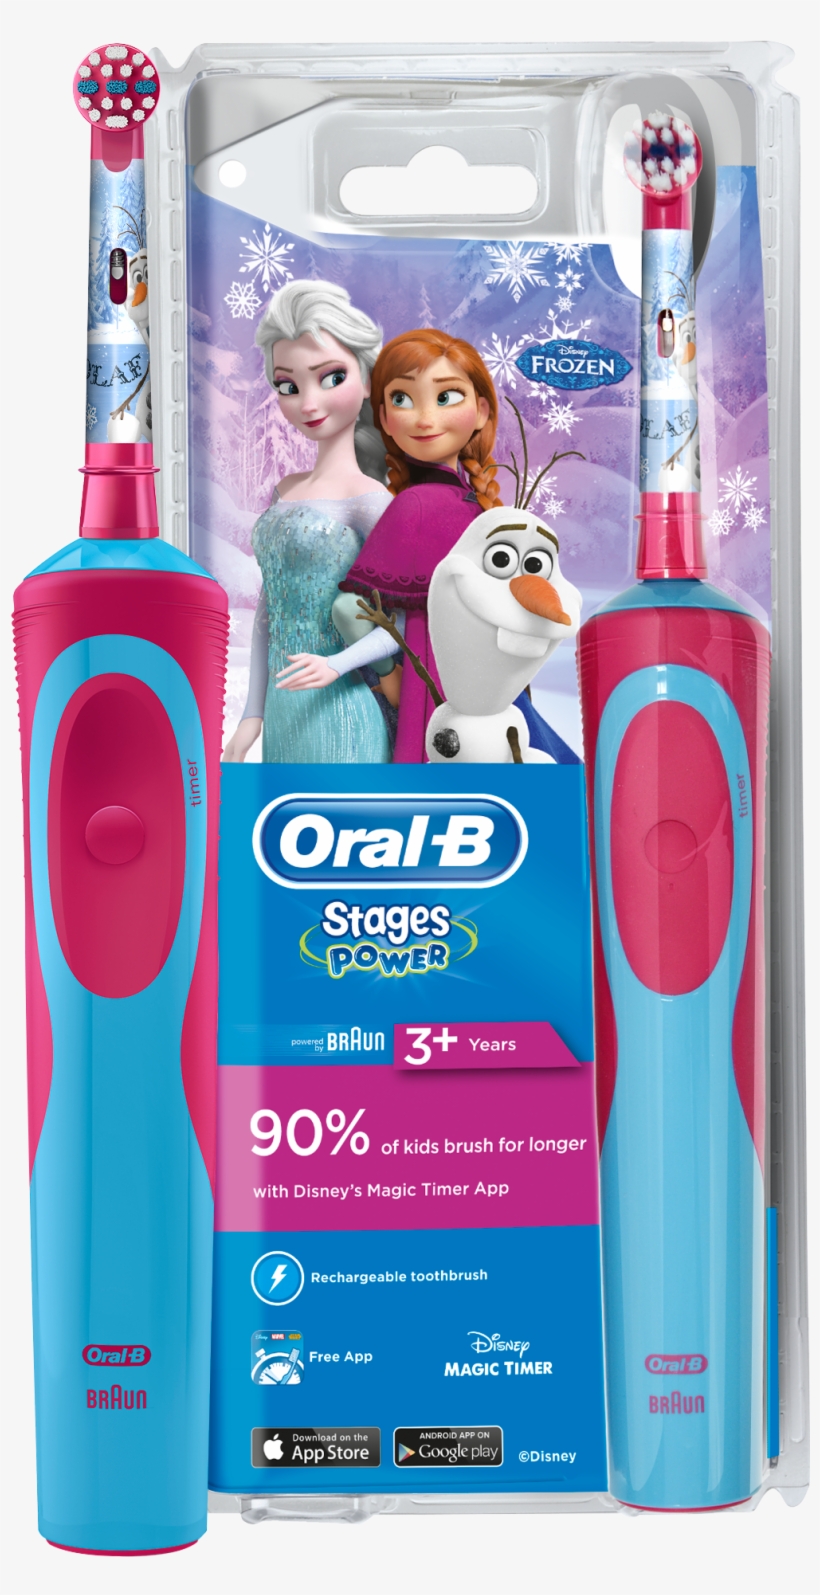 Share - Braun Oral B Frozen, transparent png #9108560